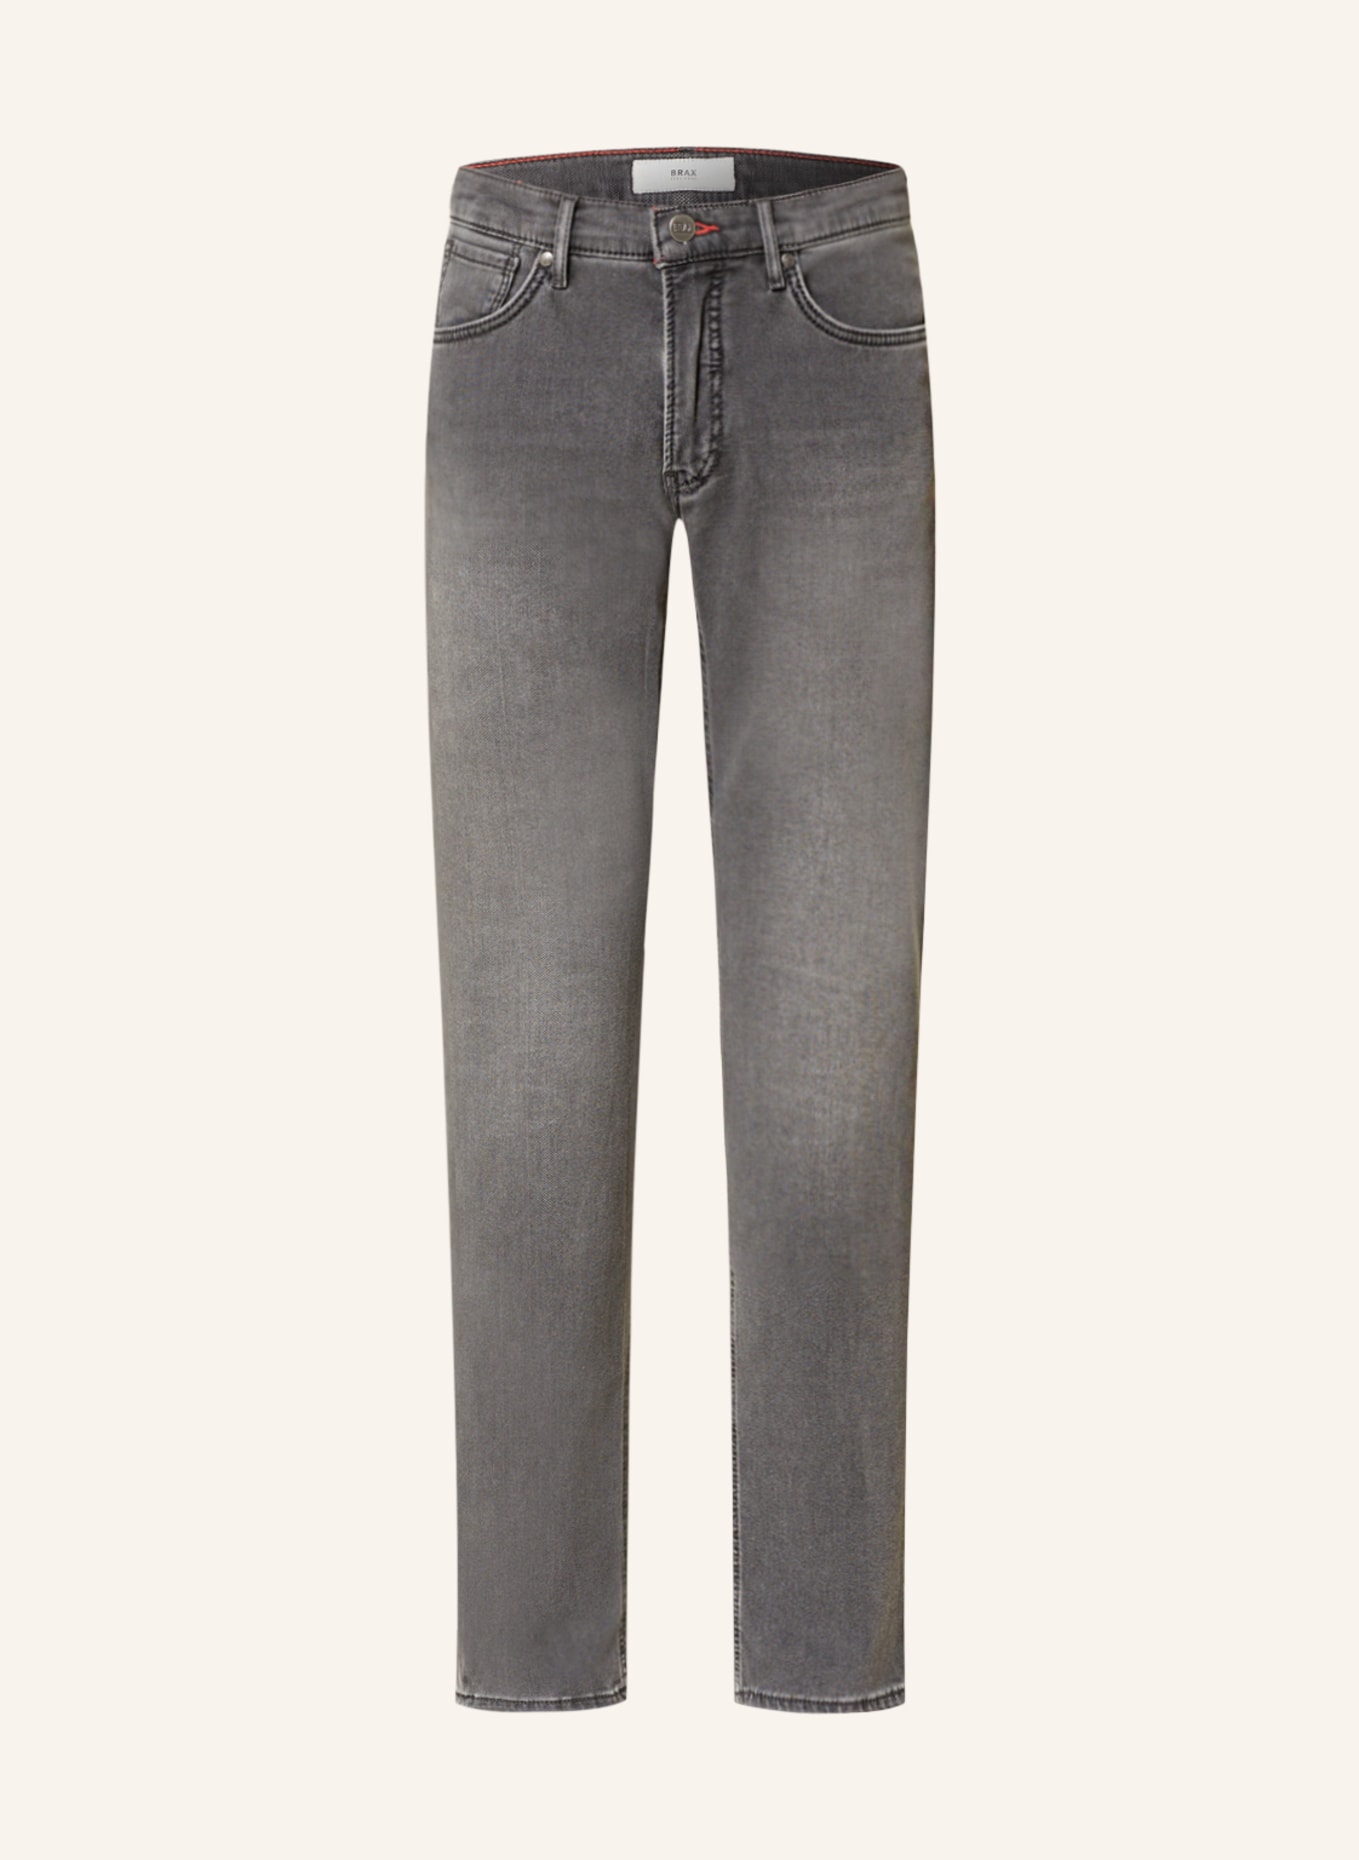 BRAX Jeans CHUCK Modern Fit used slate in grey 05